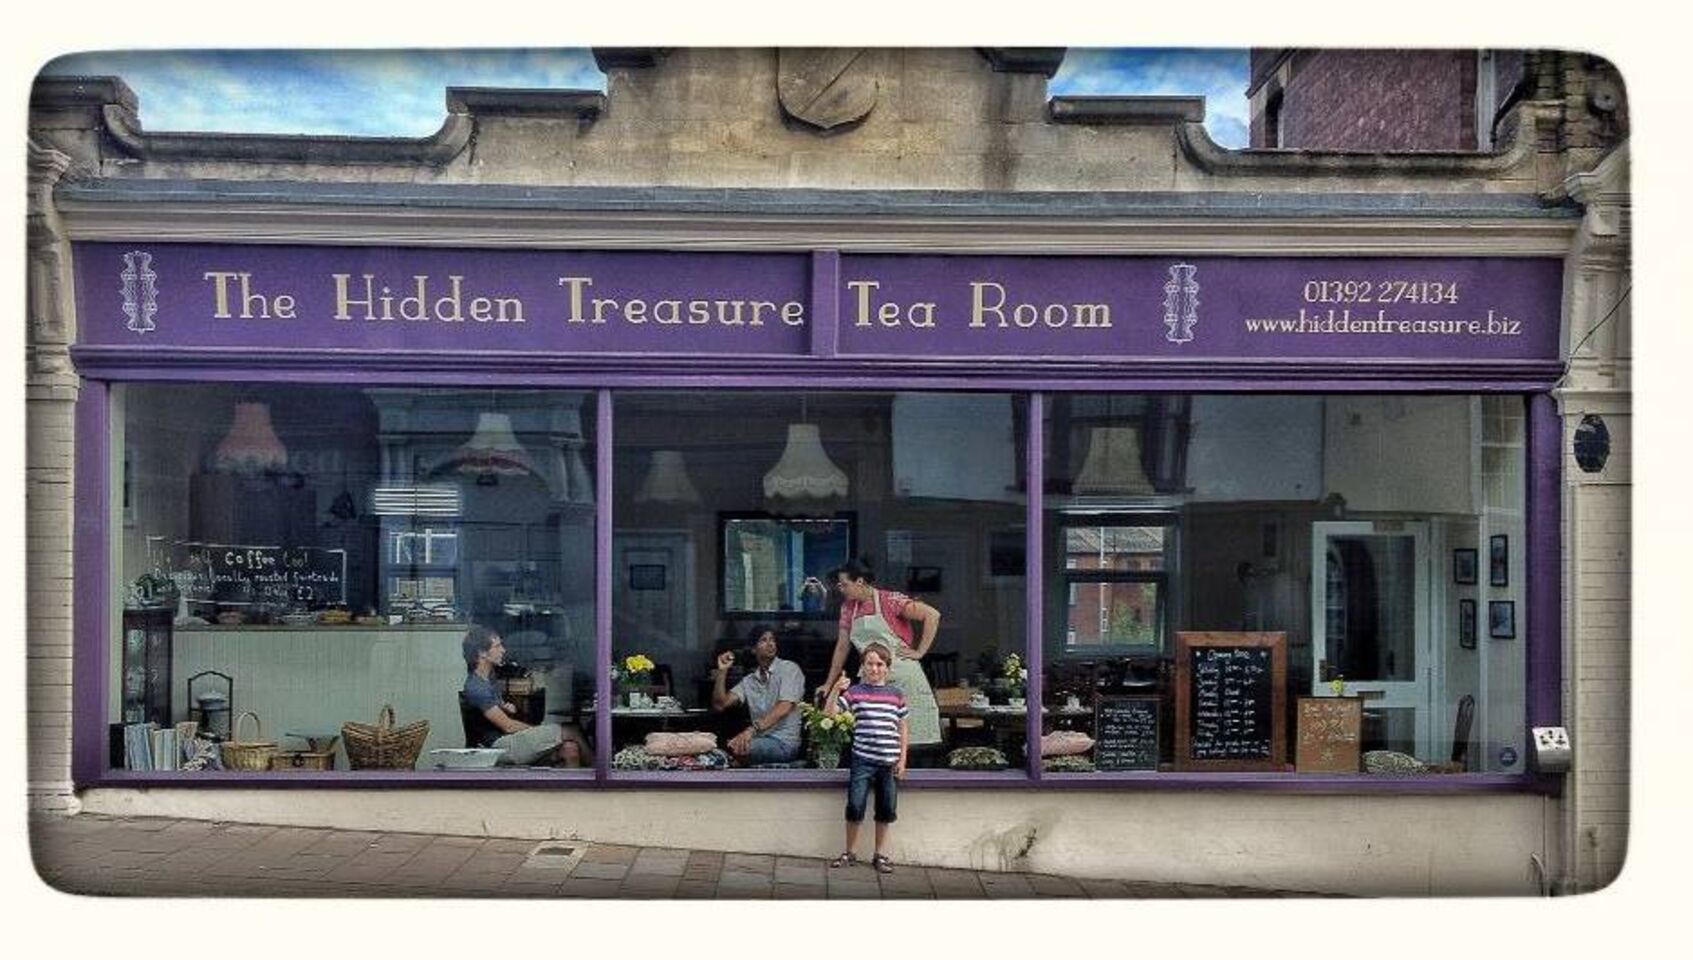 A photo of The Hidden Treasure Tea Room